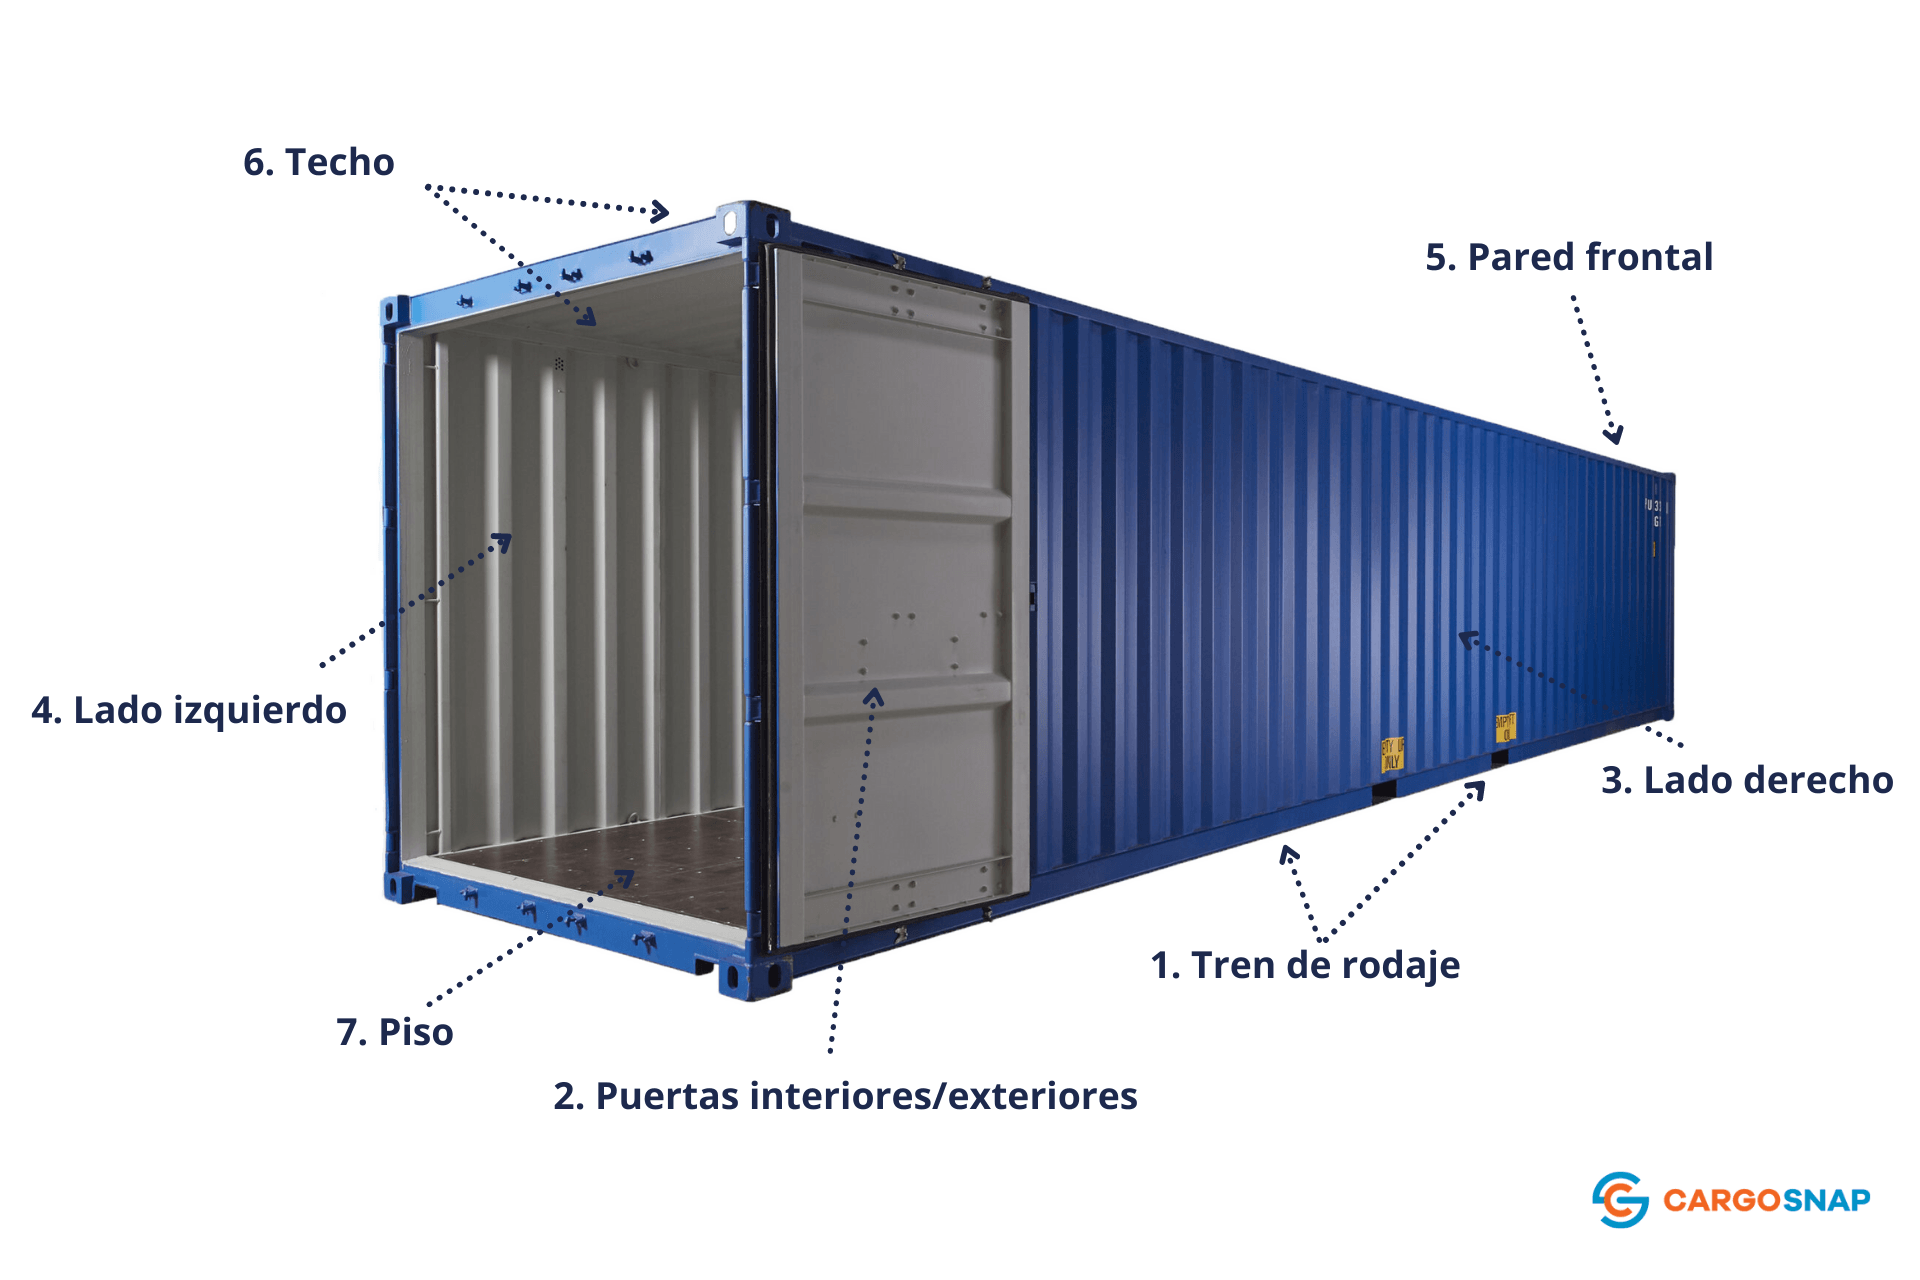 Container description